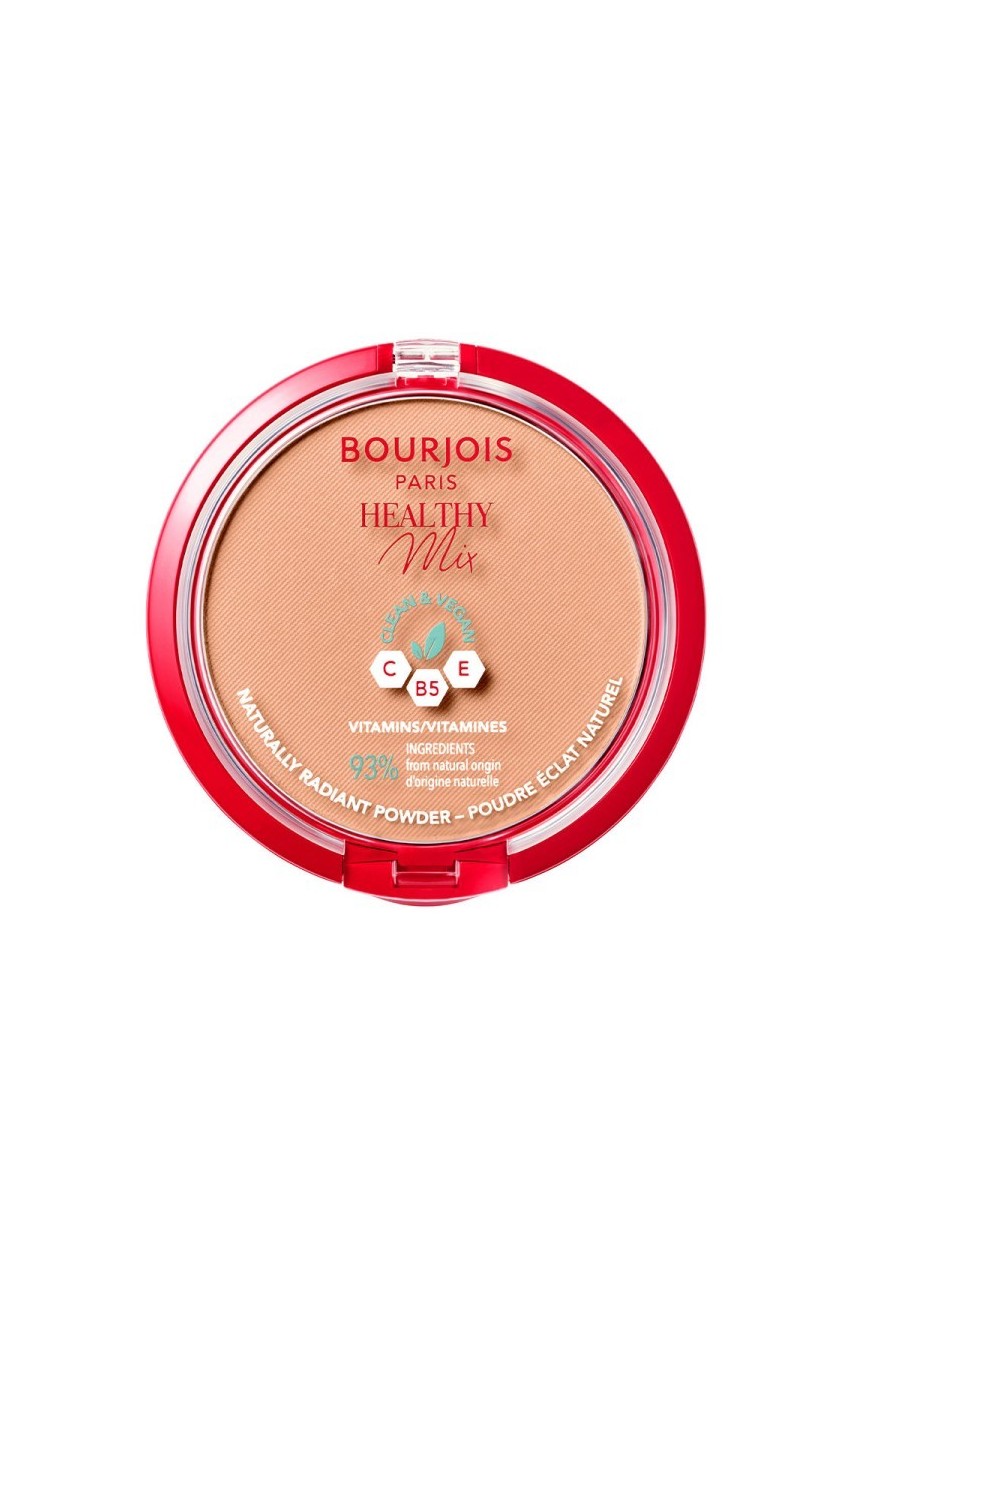 Bourjois Healthy Mix Poudre Naturel 06-Honey 10g